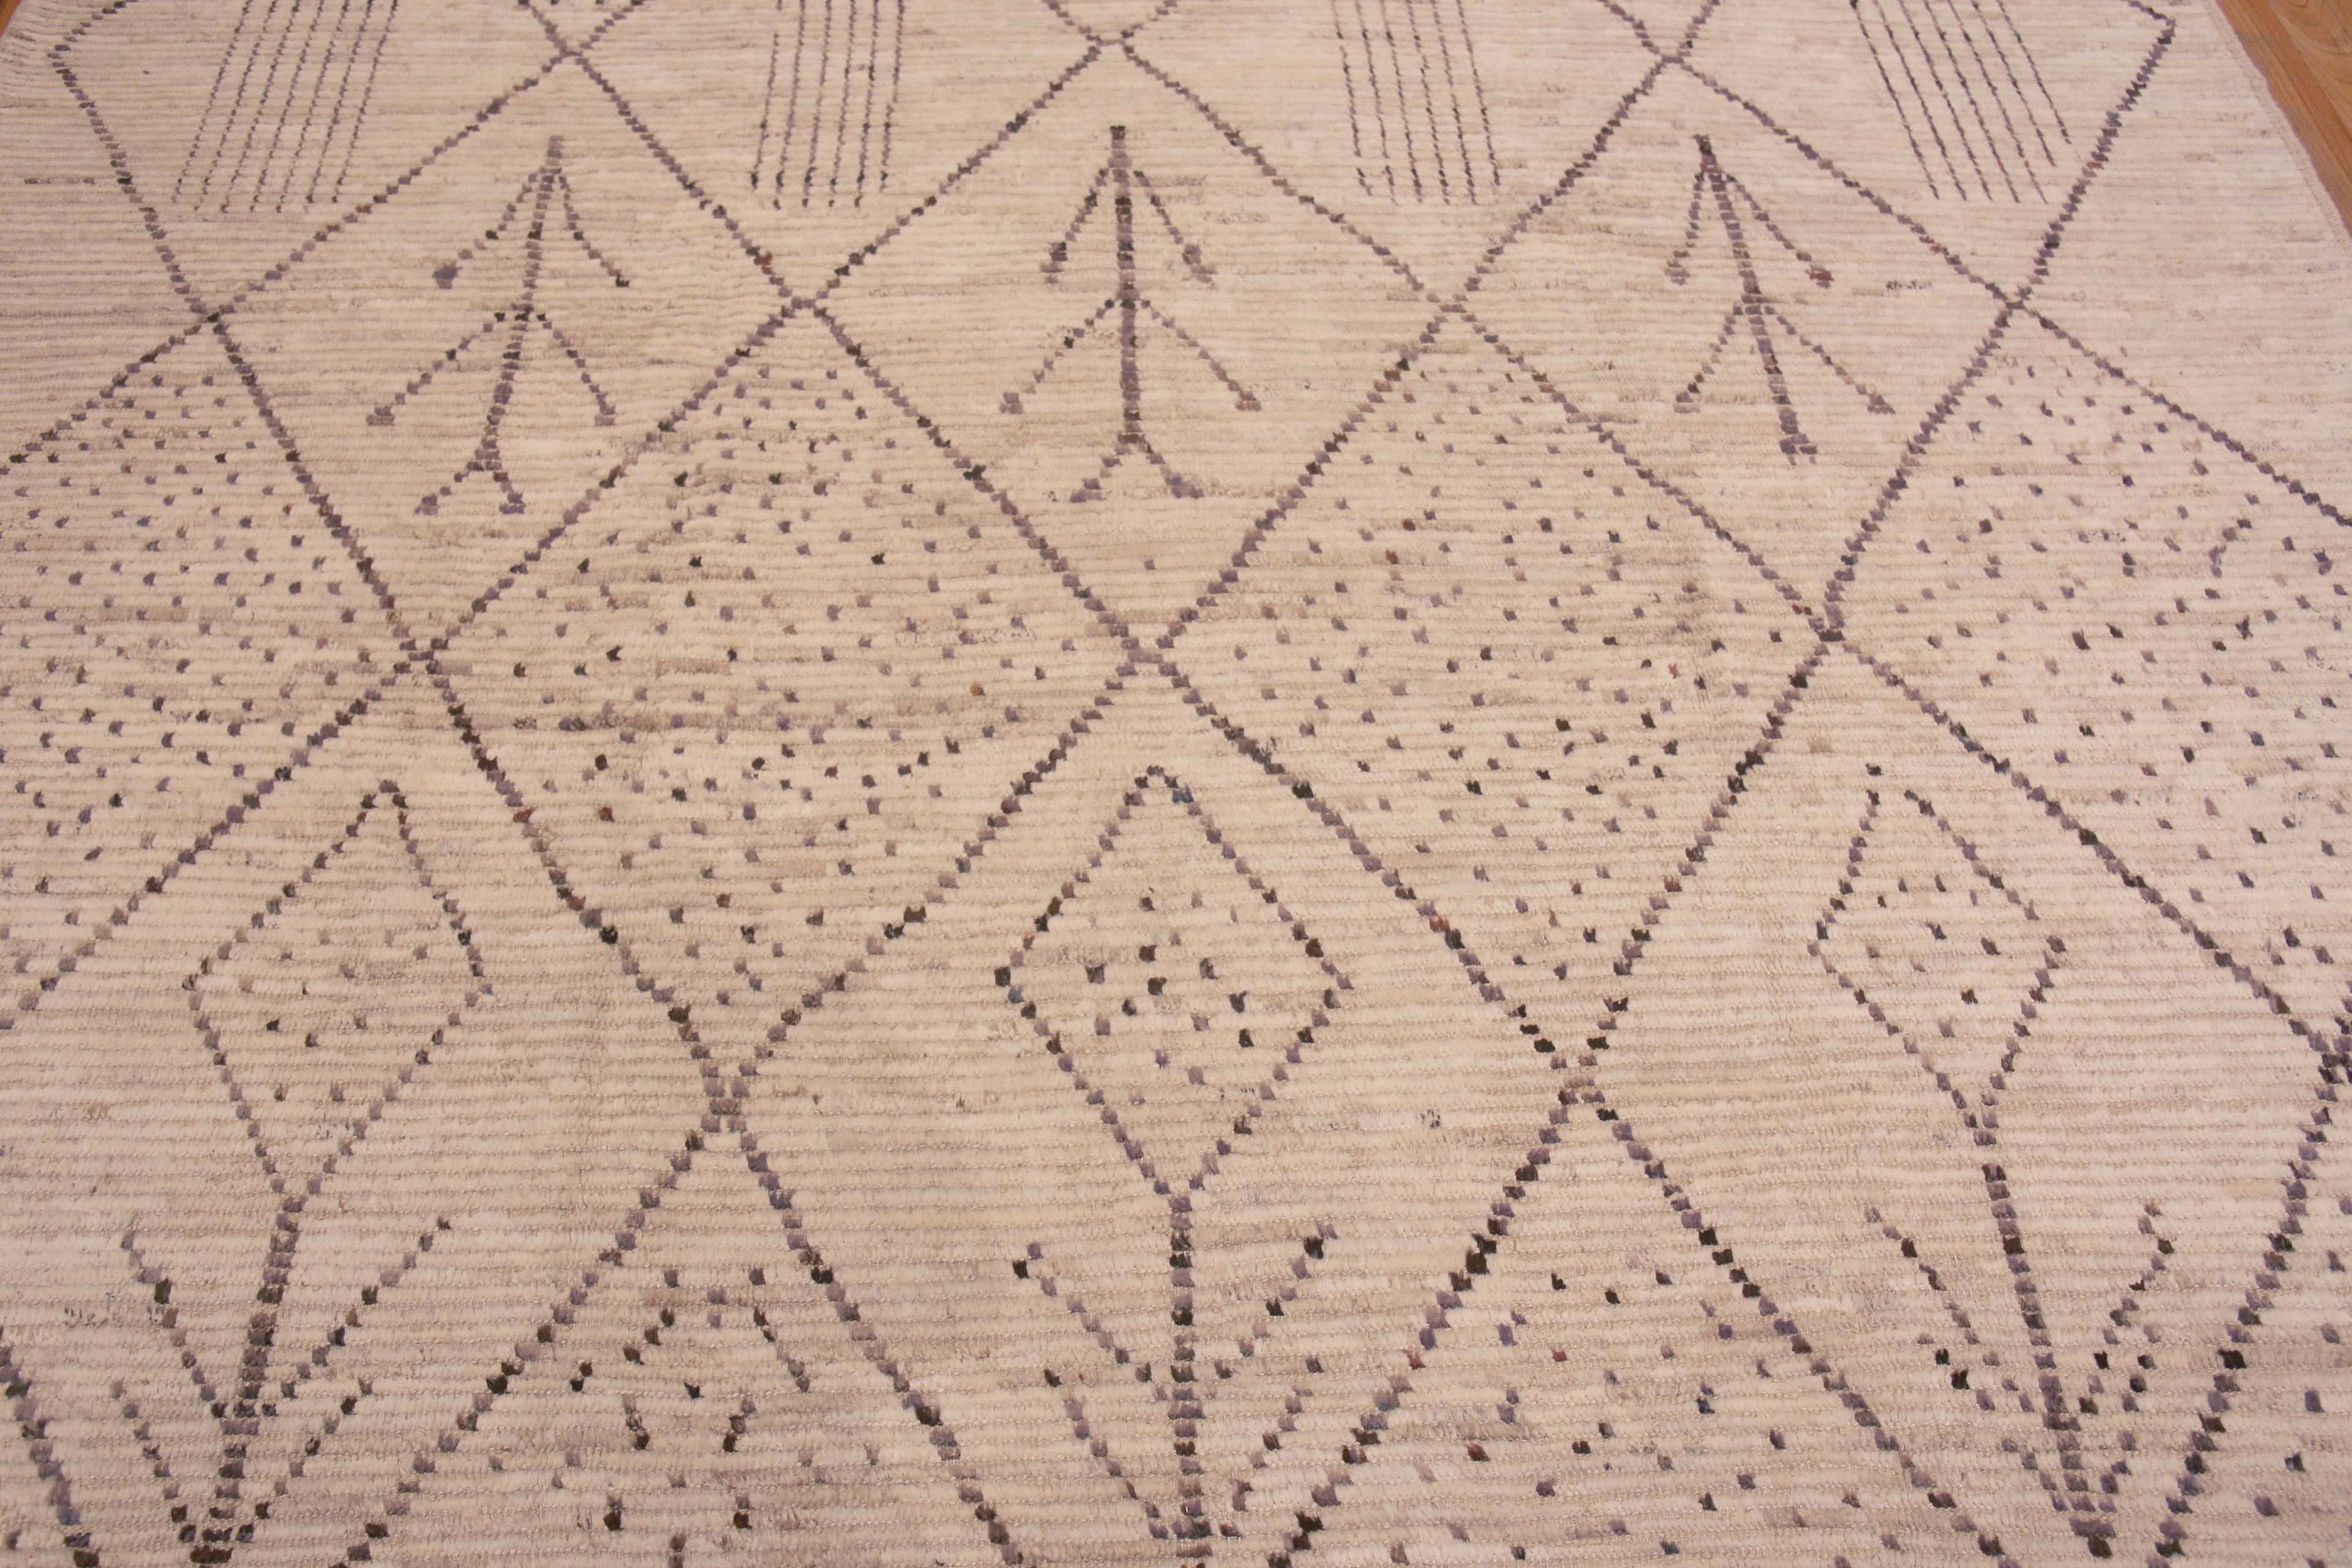 Central Asian Nazmiyal Collection Tribal Moroccan Beni Ourain Design Modern Rug 14'6